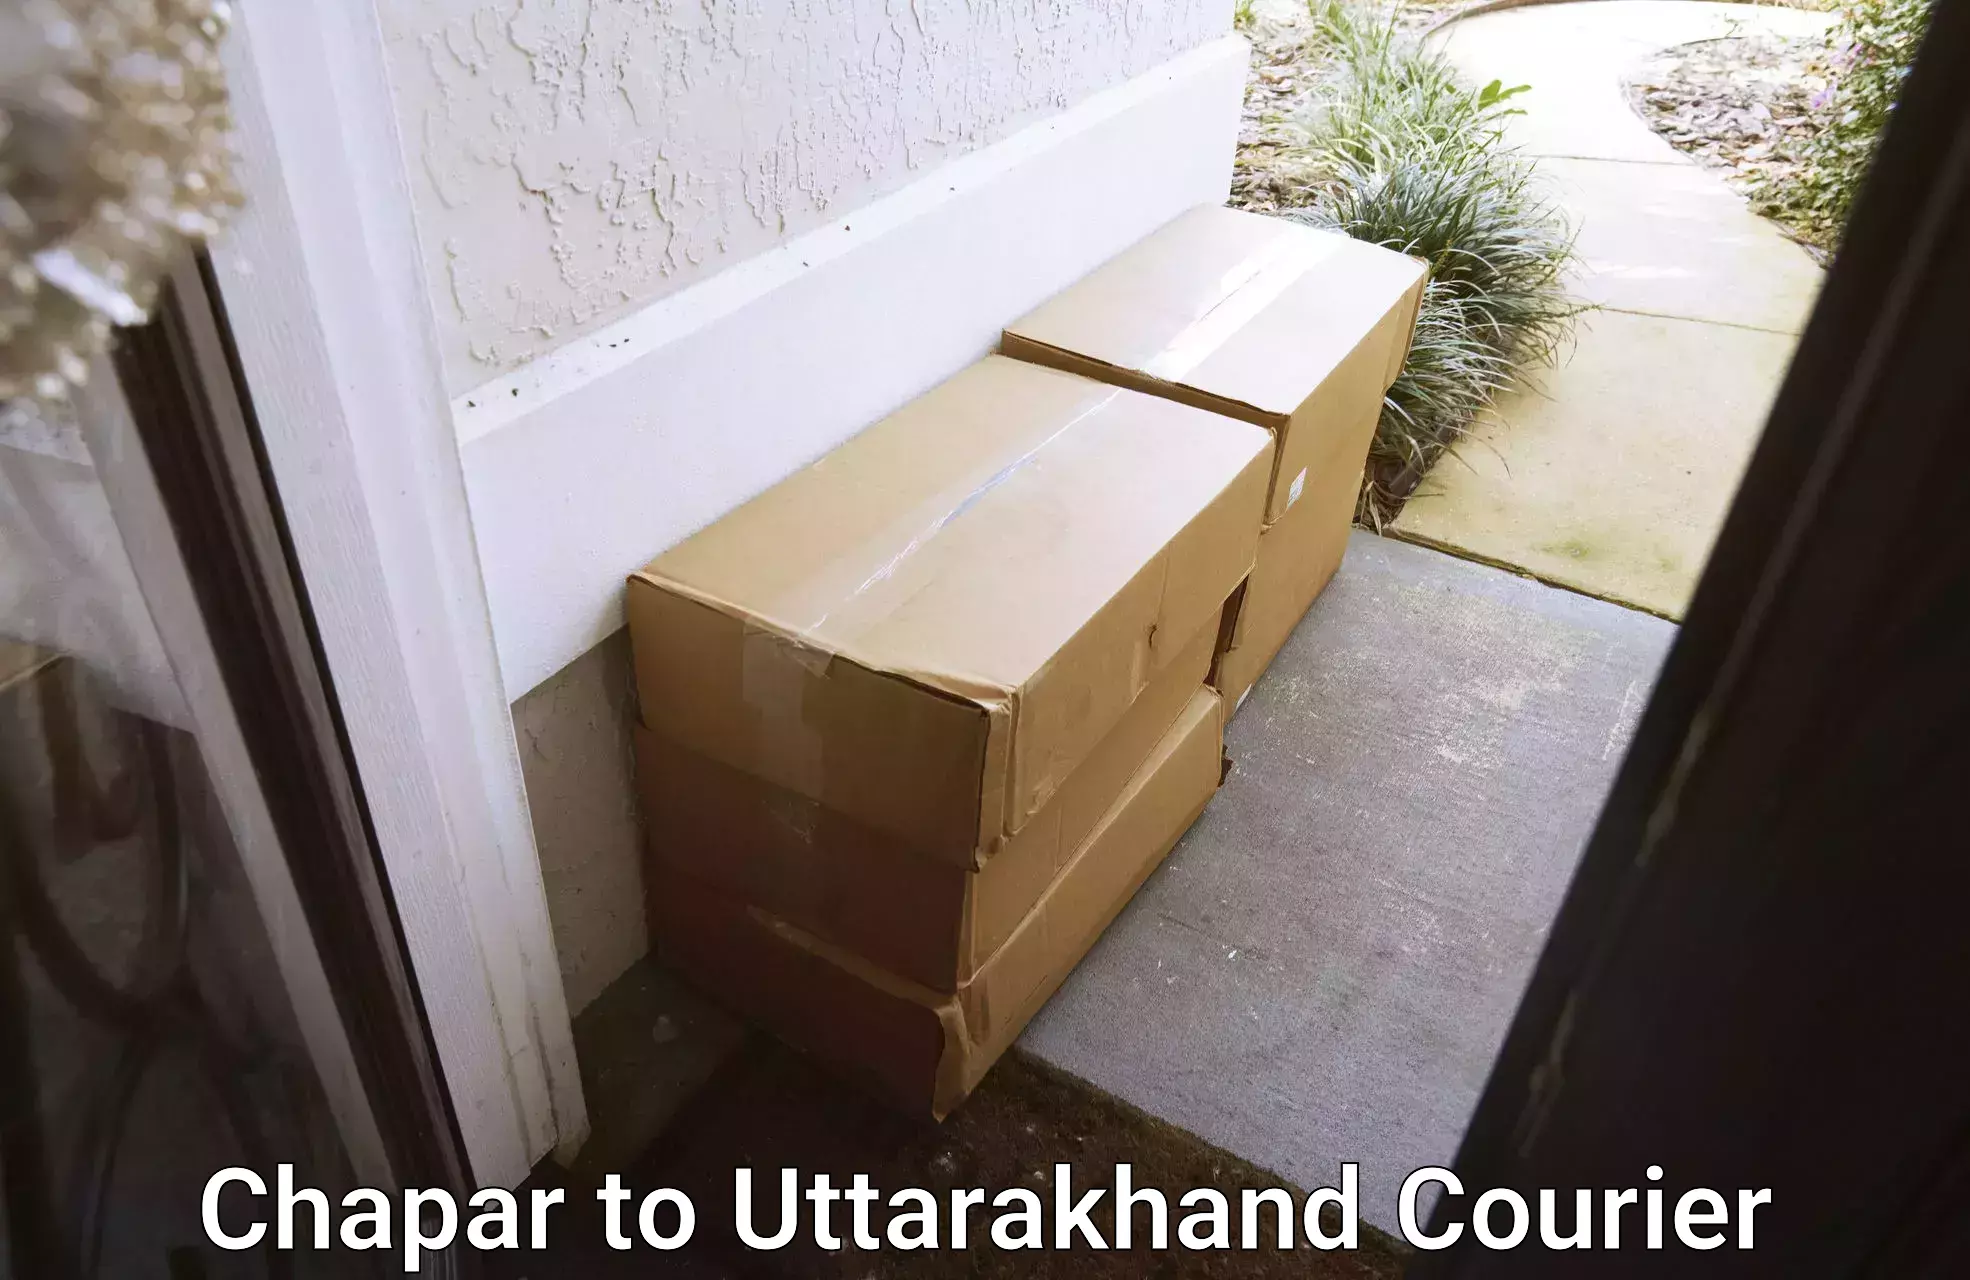 Express mail service Chapar to Dehradun